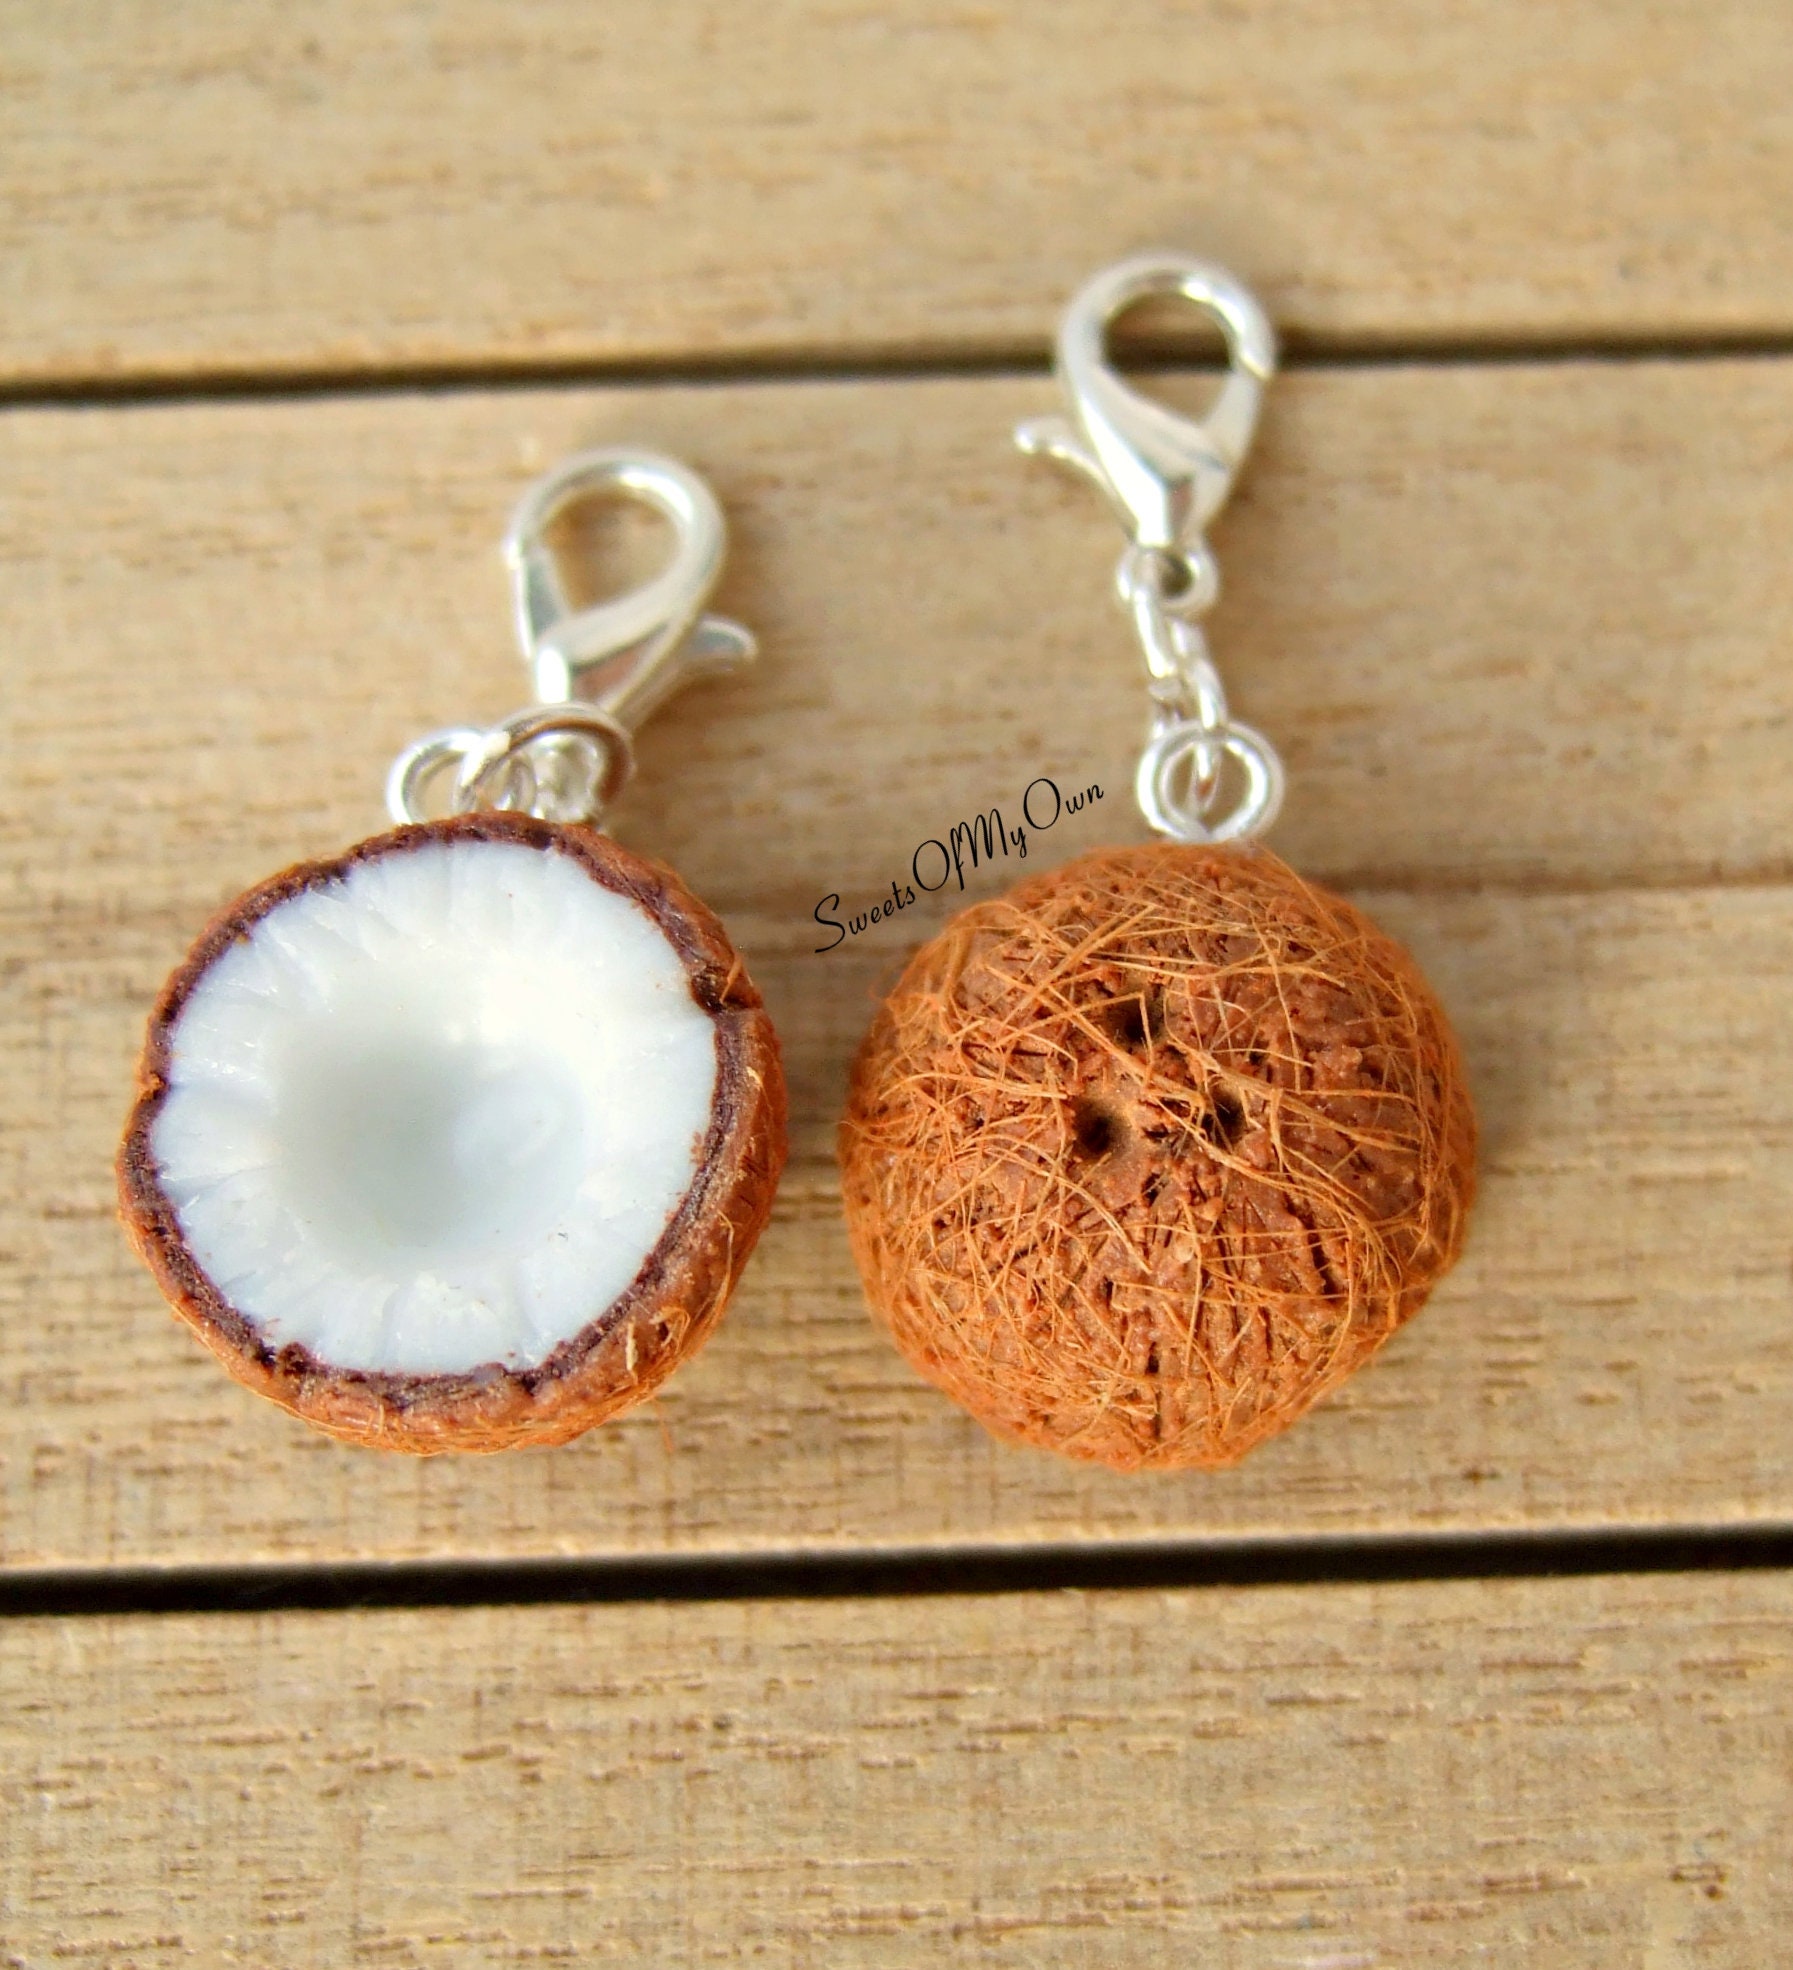 6pcs/lot Kawaii Summer Themed , Sun, Coconut Tree Design Resin Charms For  Jewelry Making, Diy Keychain, Earrings, Pendant Etc.